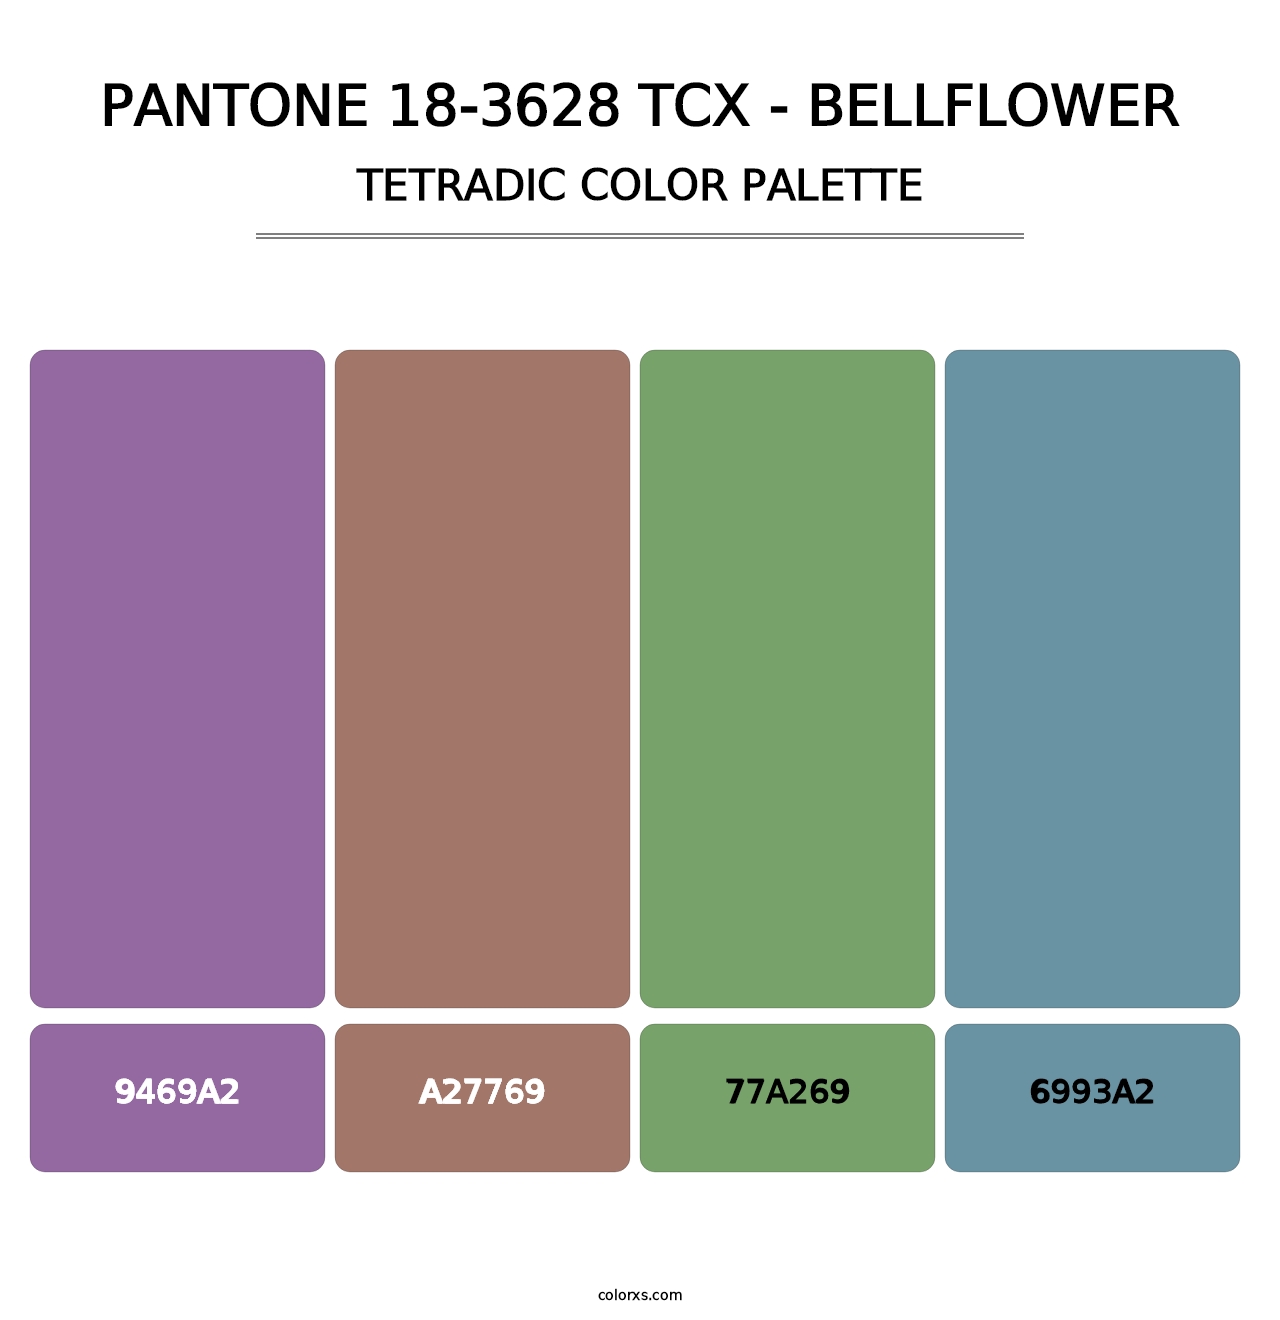 PANTONE 18-3628 TCX - Bellflower - Tetradic Color Palette